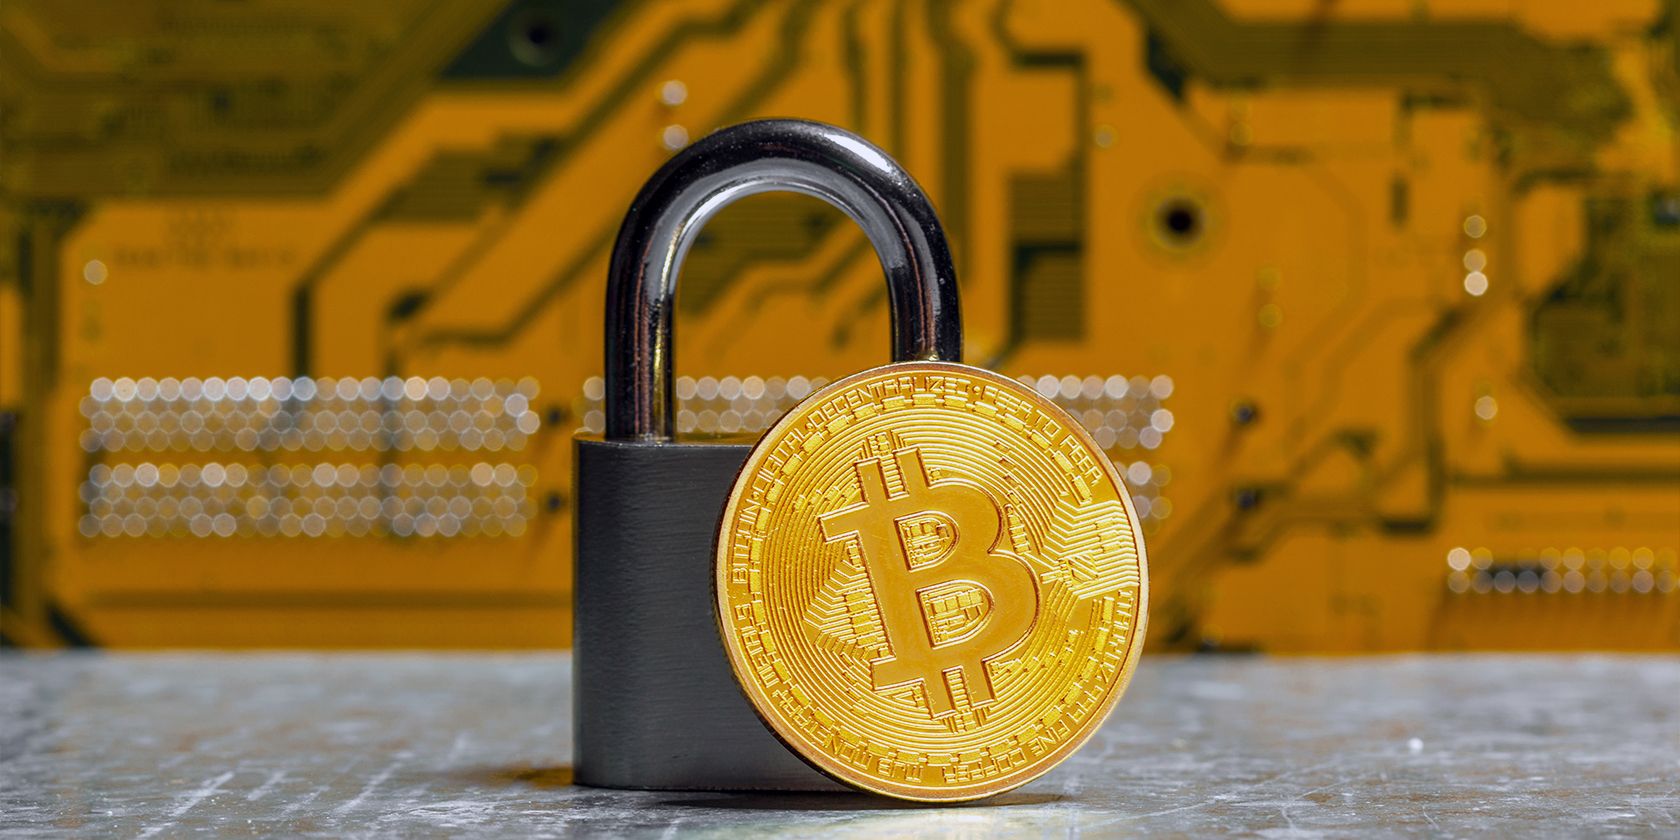 Bitcoin dorado y un candado